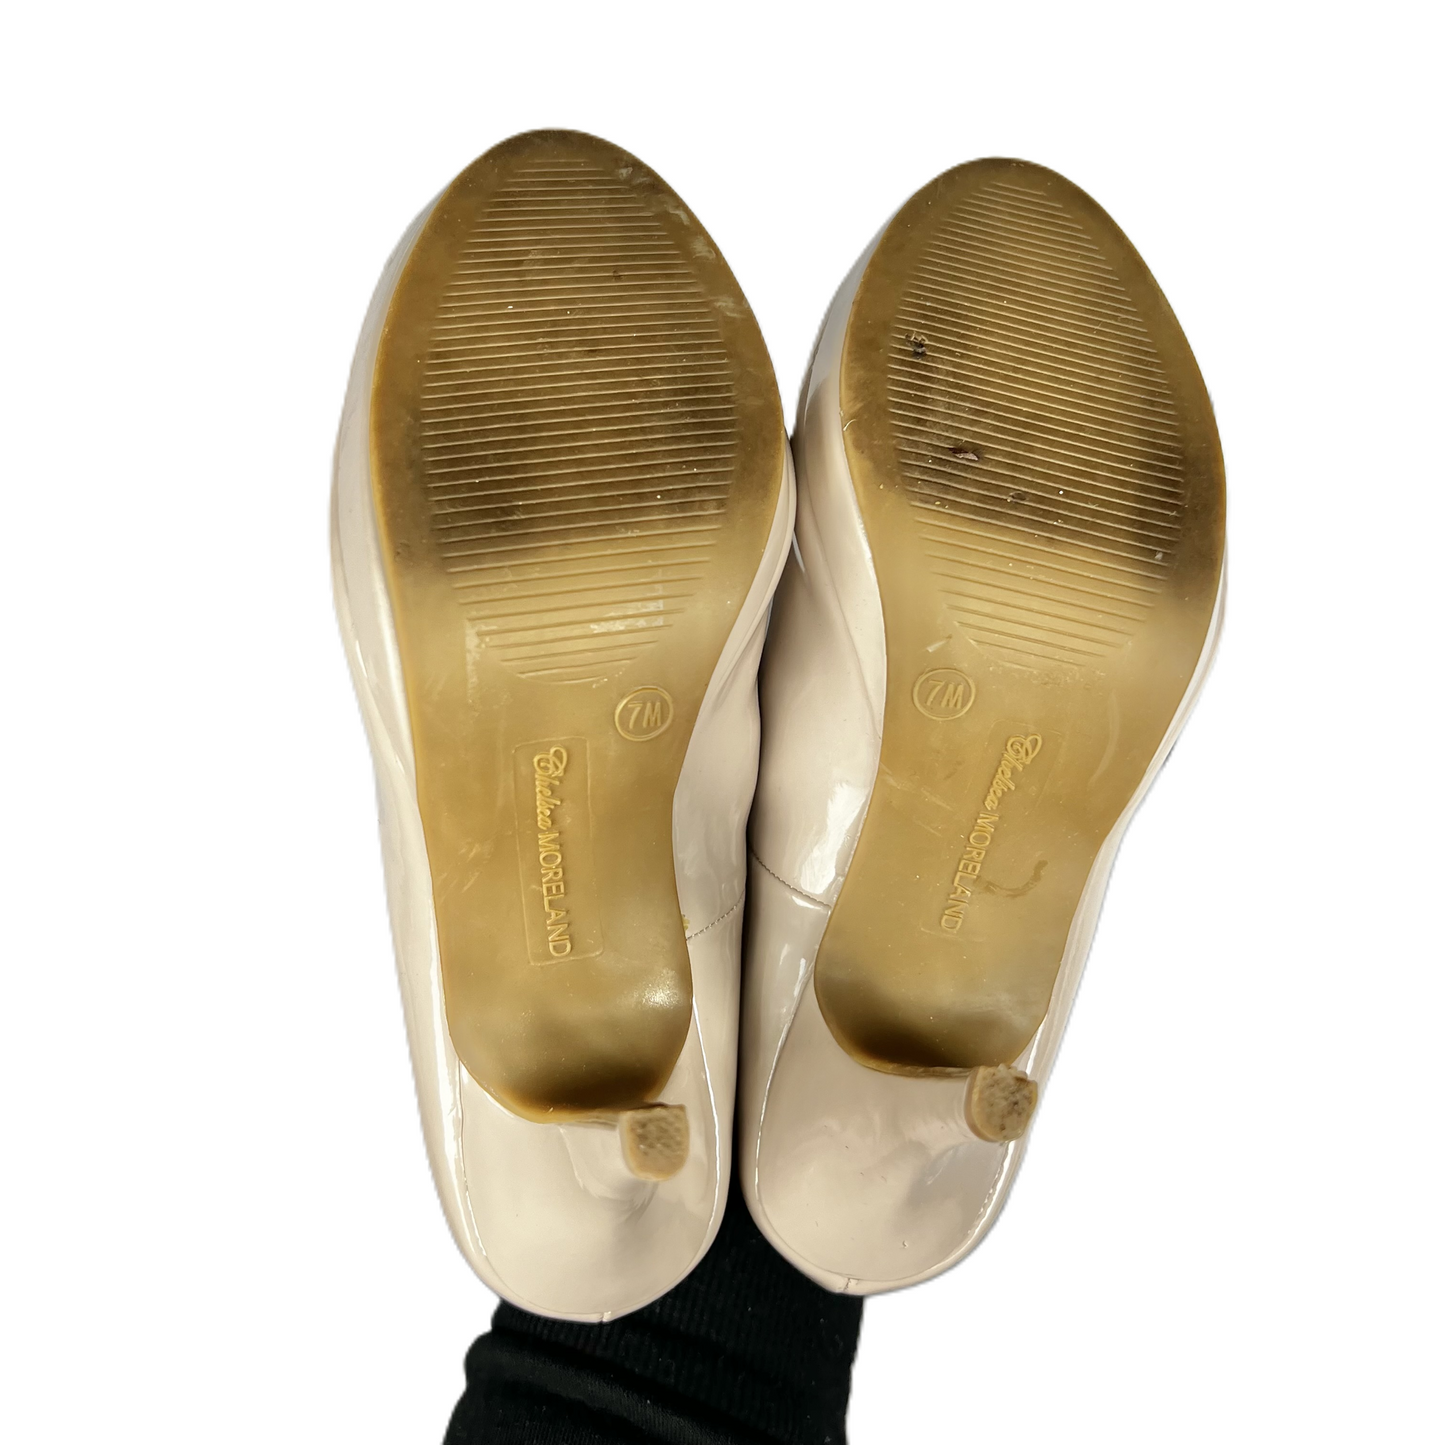 Beige Shoes Heels Stiletto By Chelsea Moreland, Size: 7